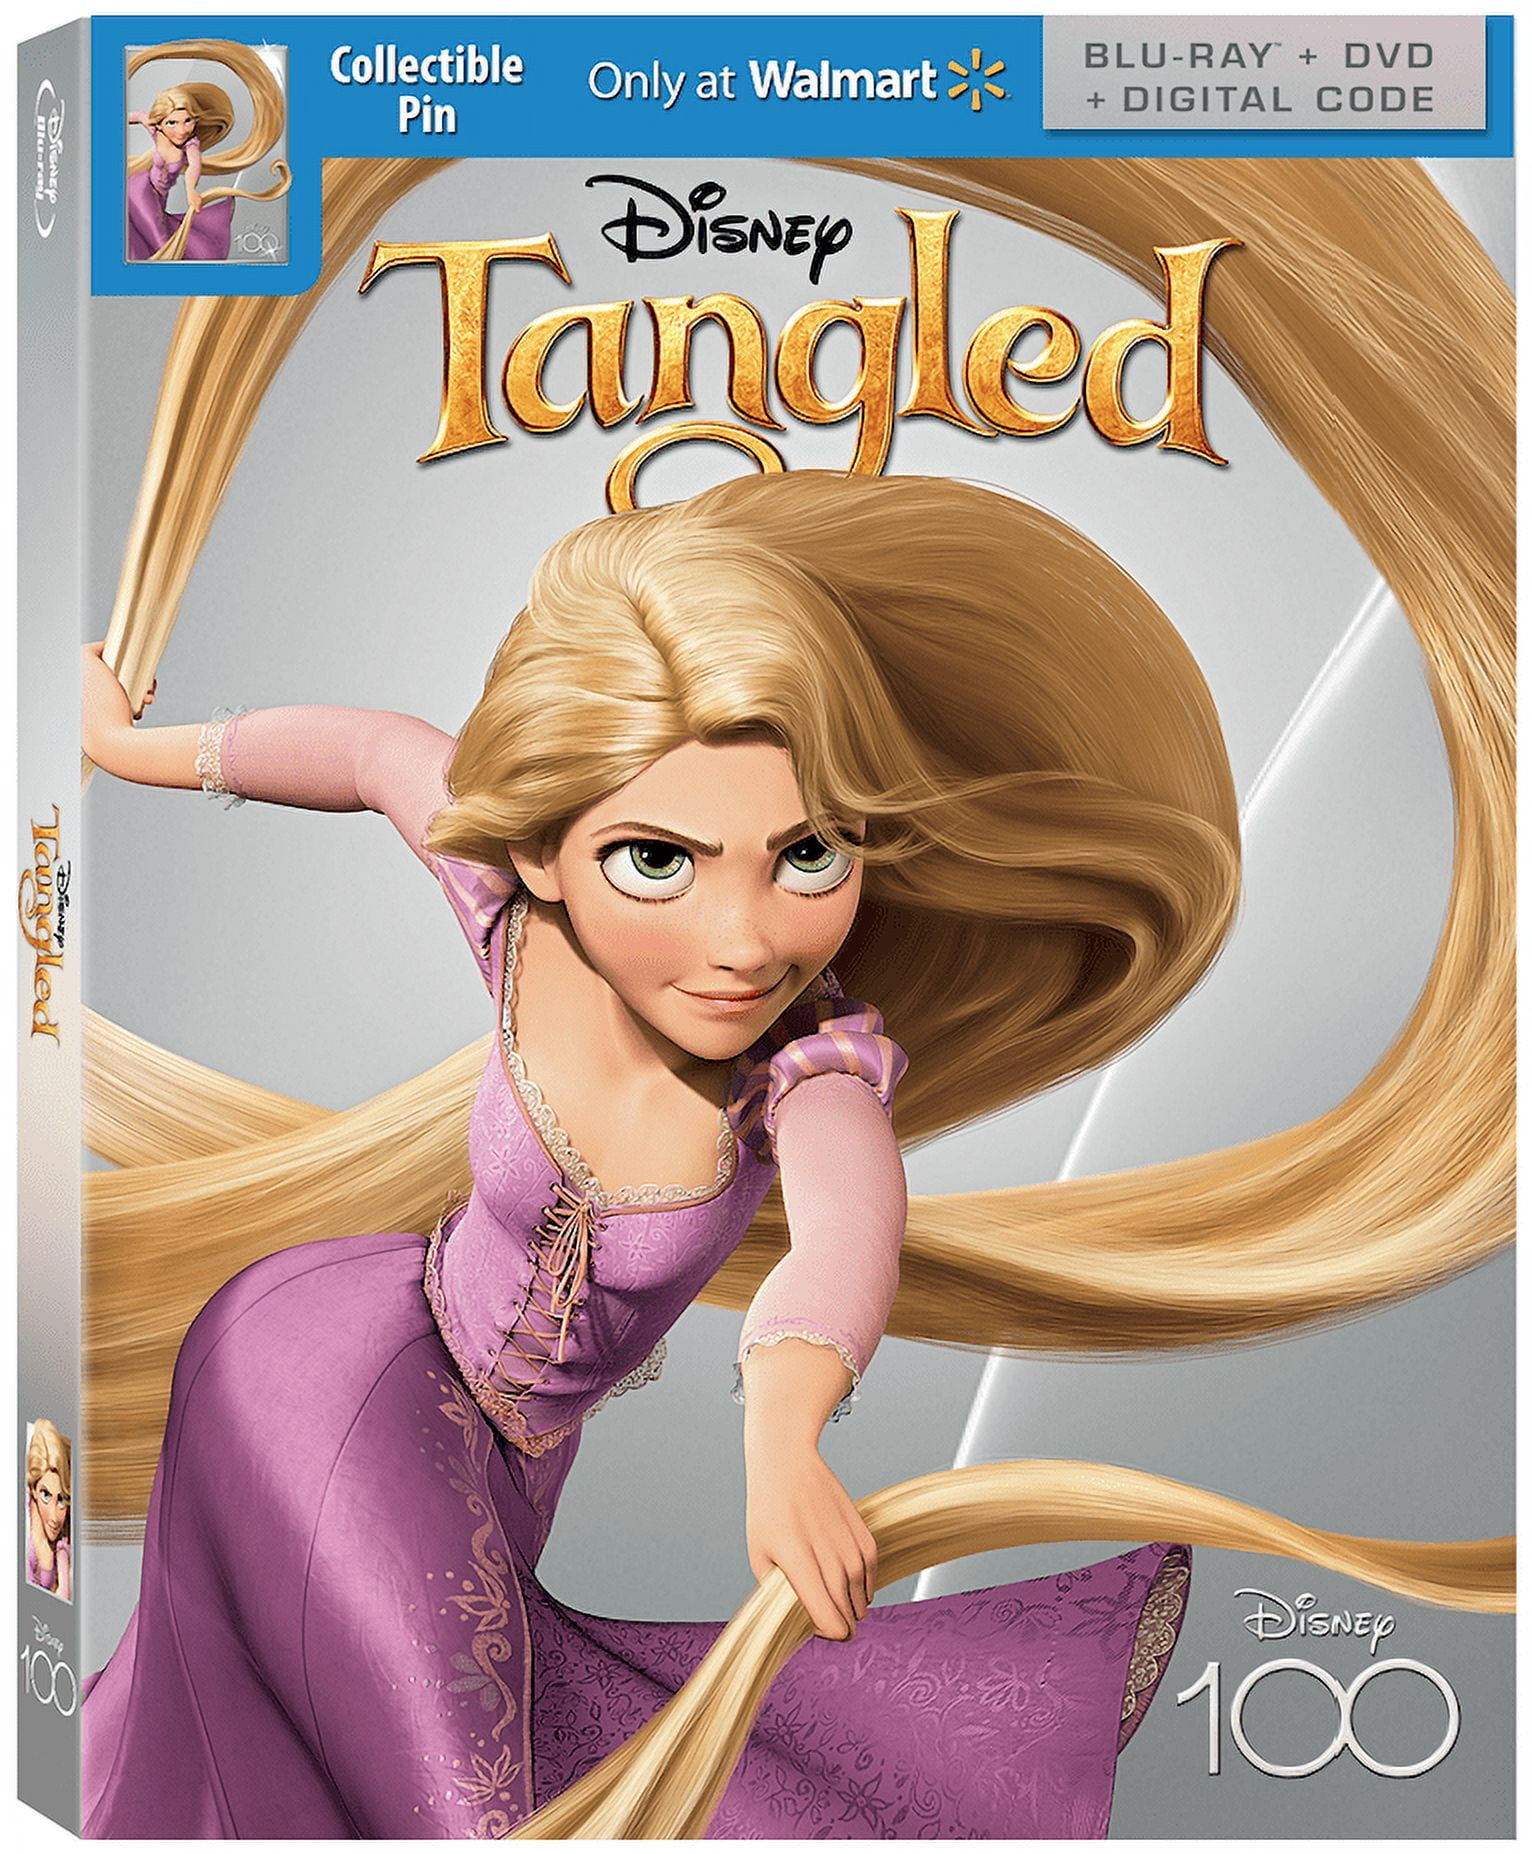 Frozen - Disney100 Edition Walmart Exclusive (Blu-ray + DVD + Digital Code)